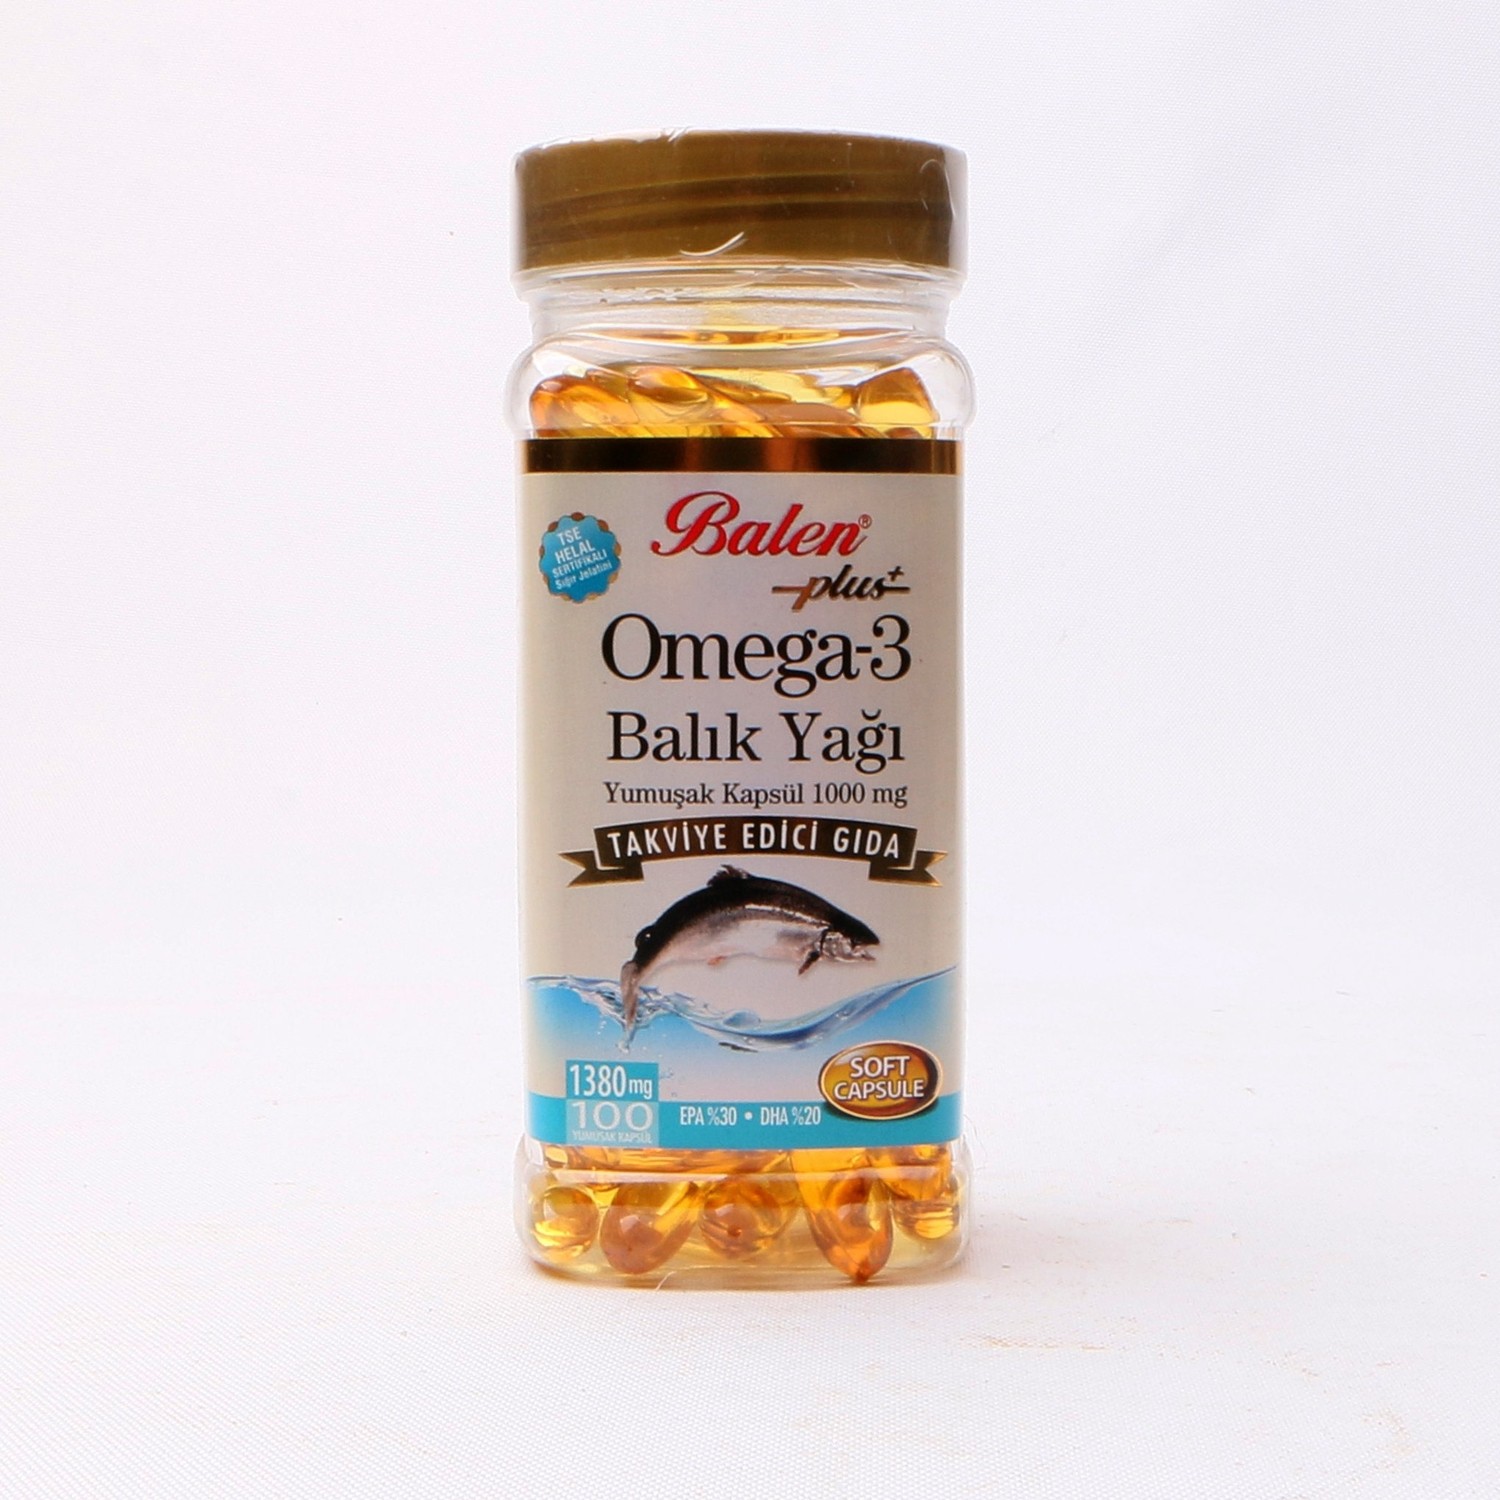 Рыбий жир Balen Omega 3, 200 капсул, 1380 мг